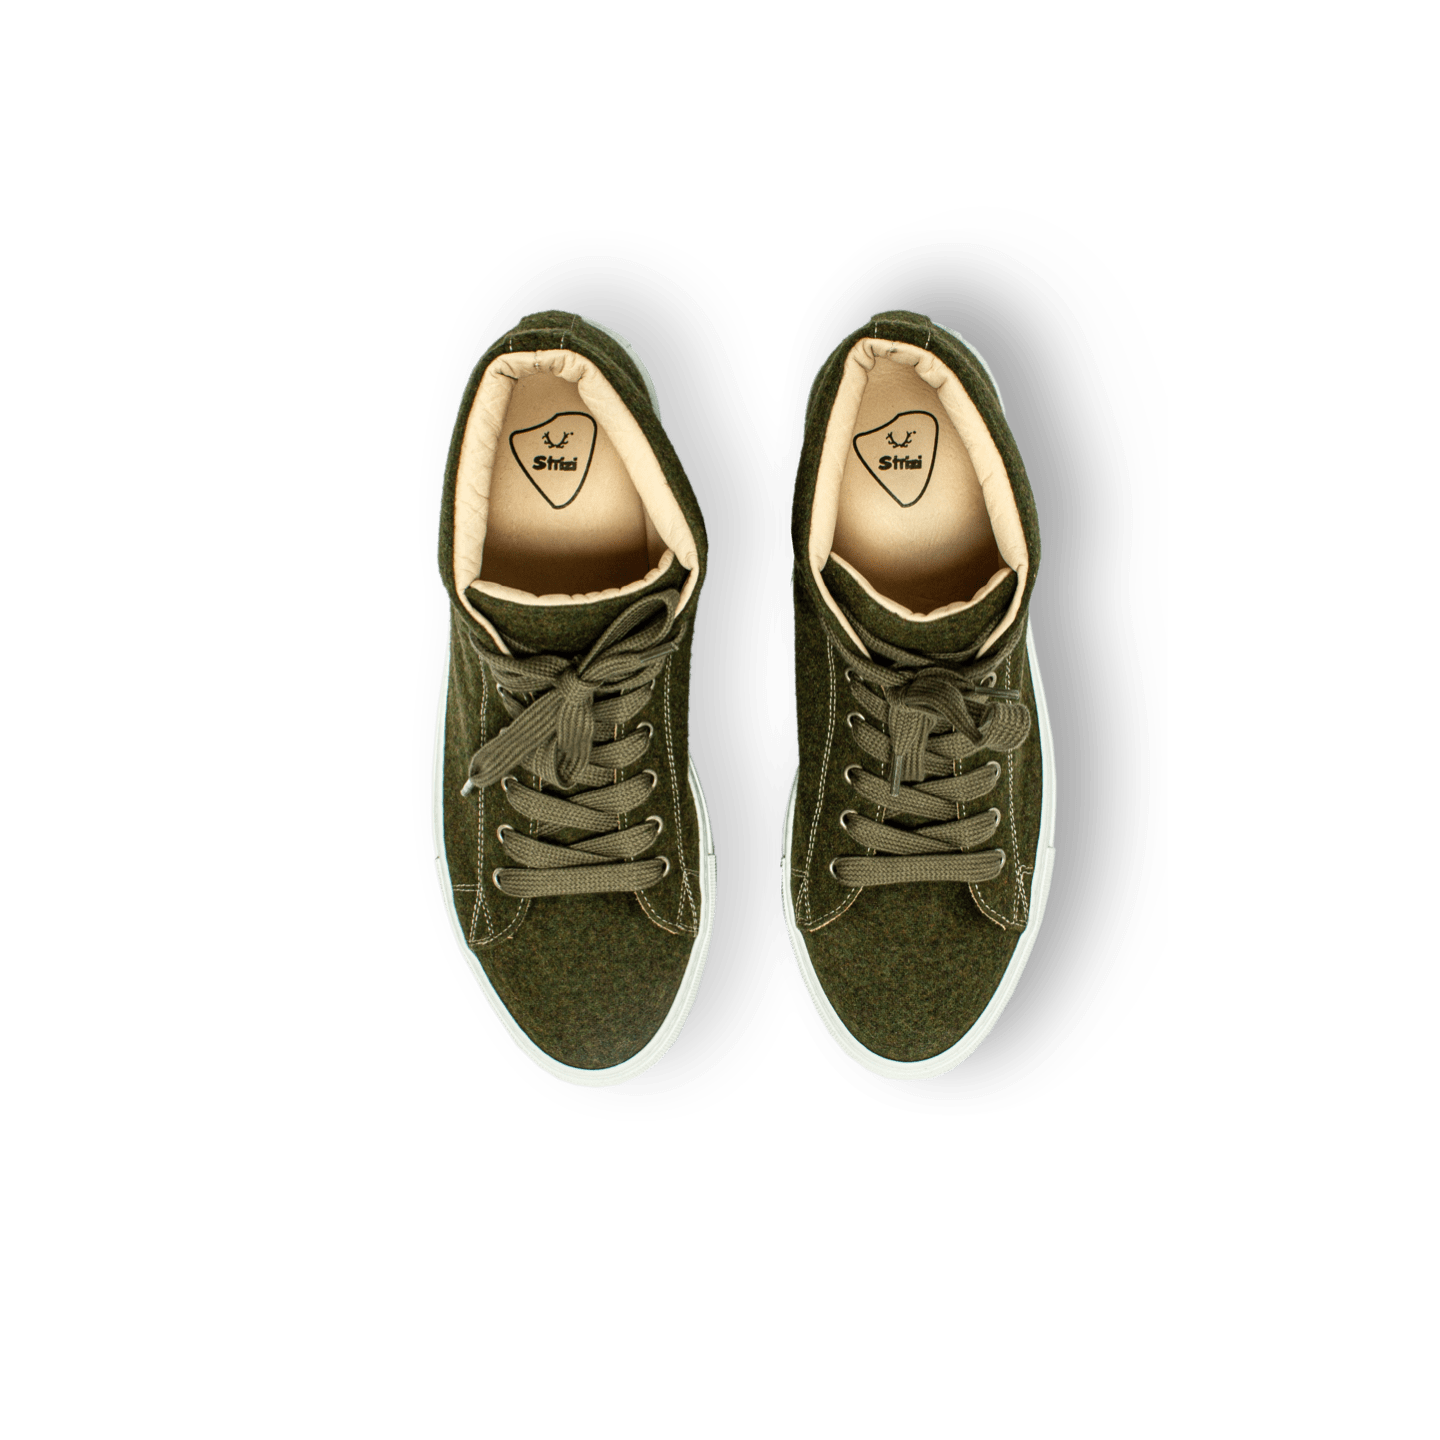 Strizi Schuhe Sneaker grün midcut 4 - Strizi Sneaker green